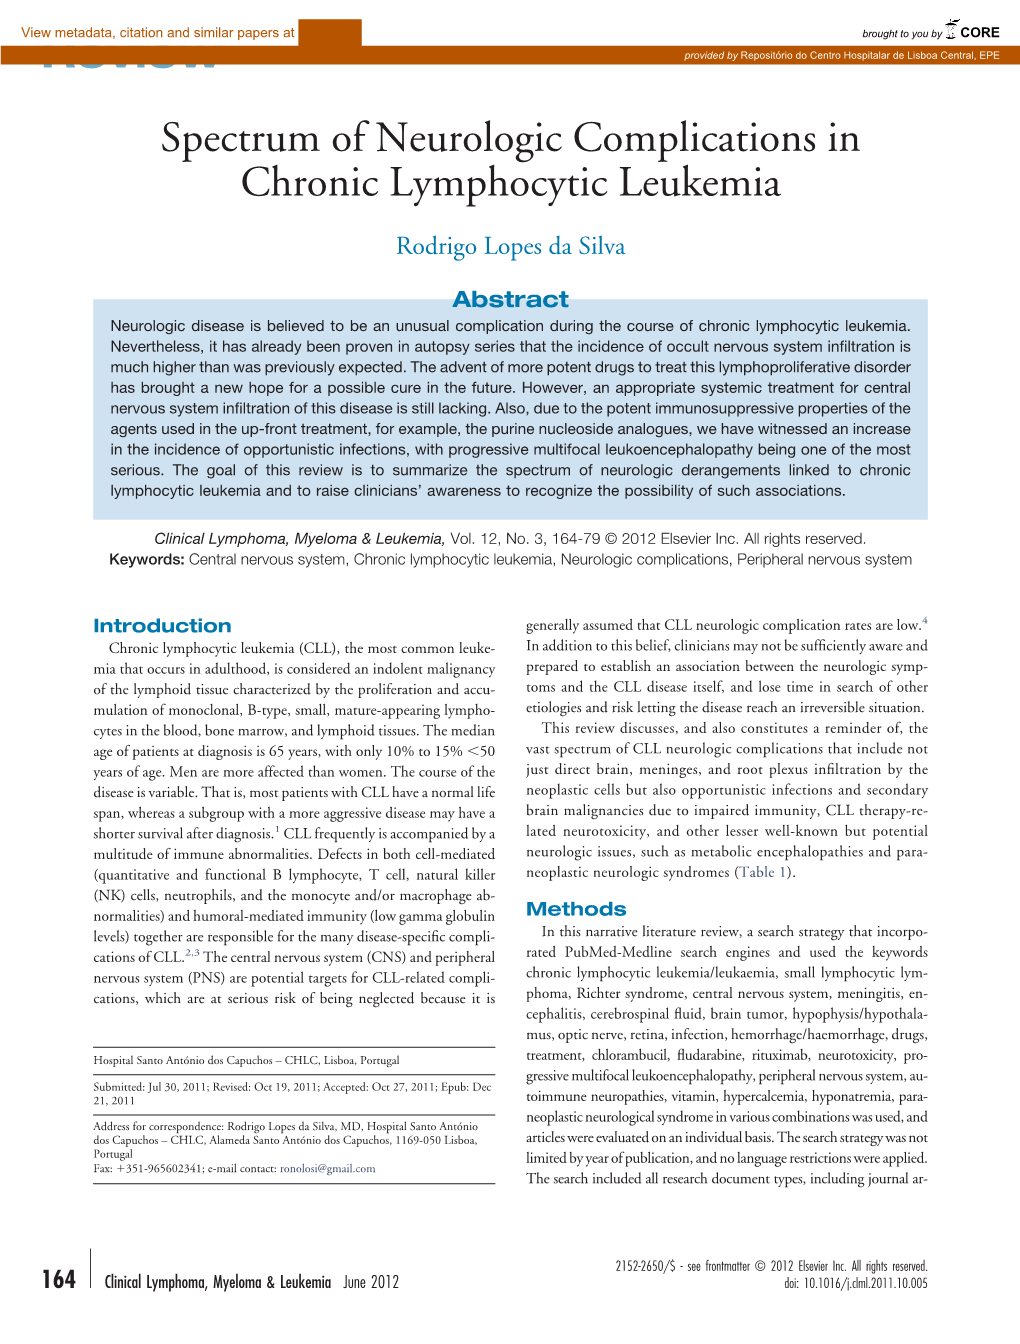 Spectrum of Neurologic Complications in Chronic Lymphocytic Leukemia